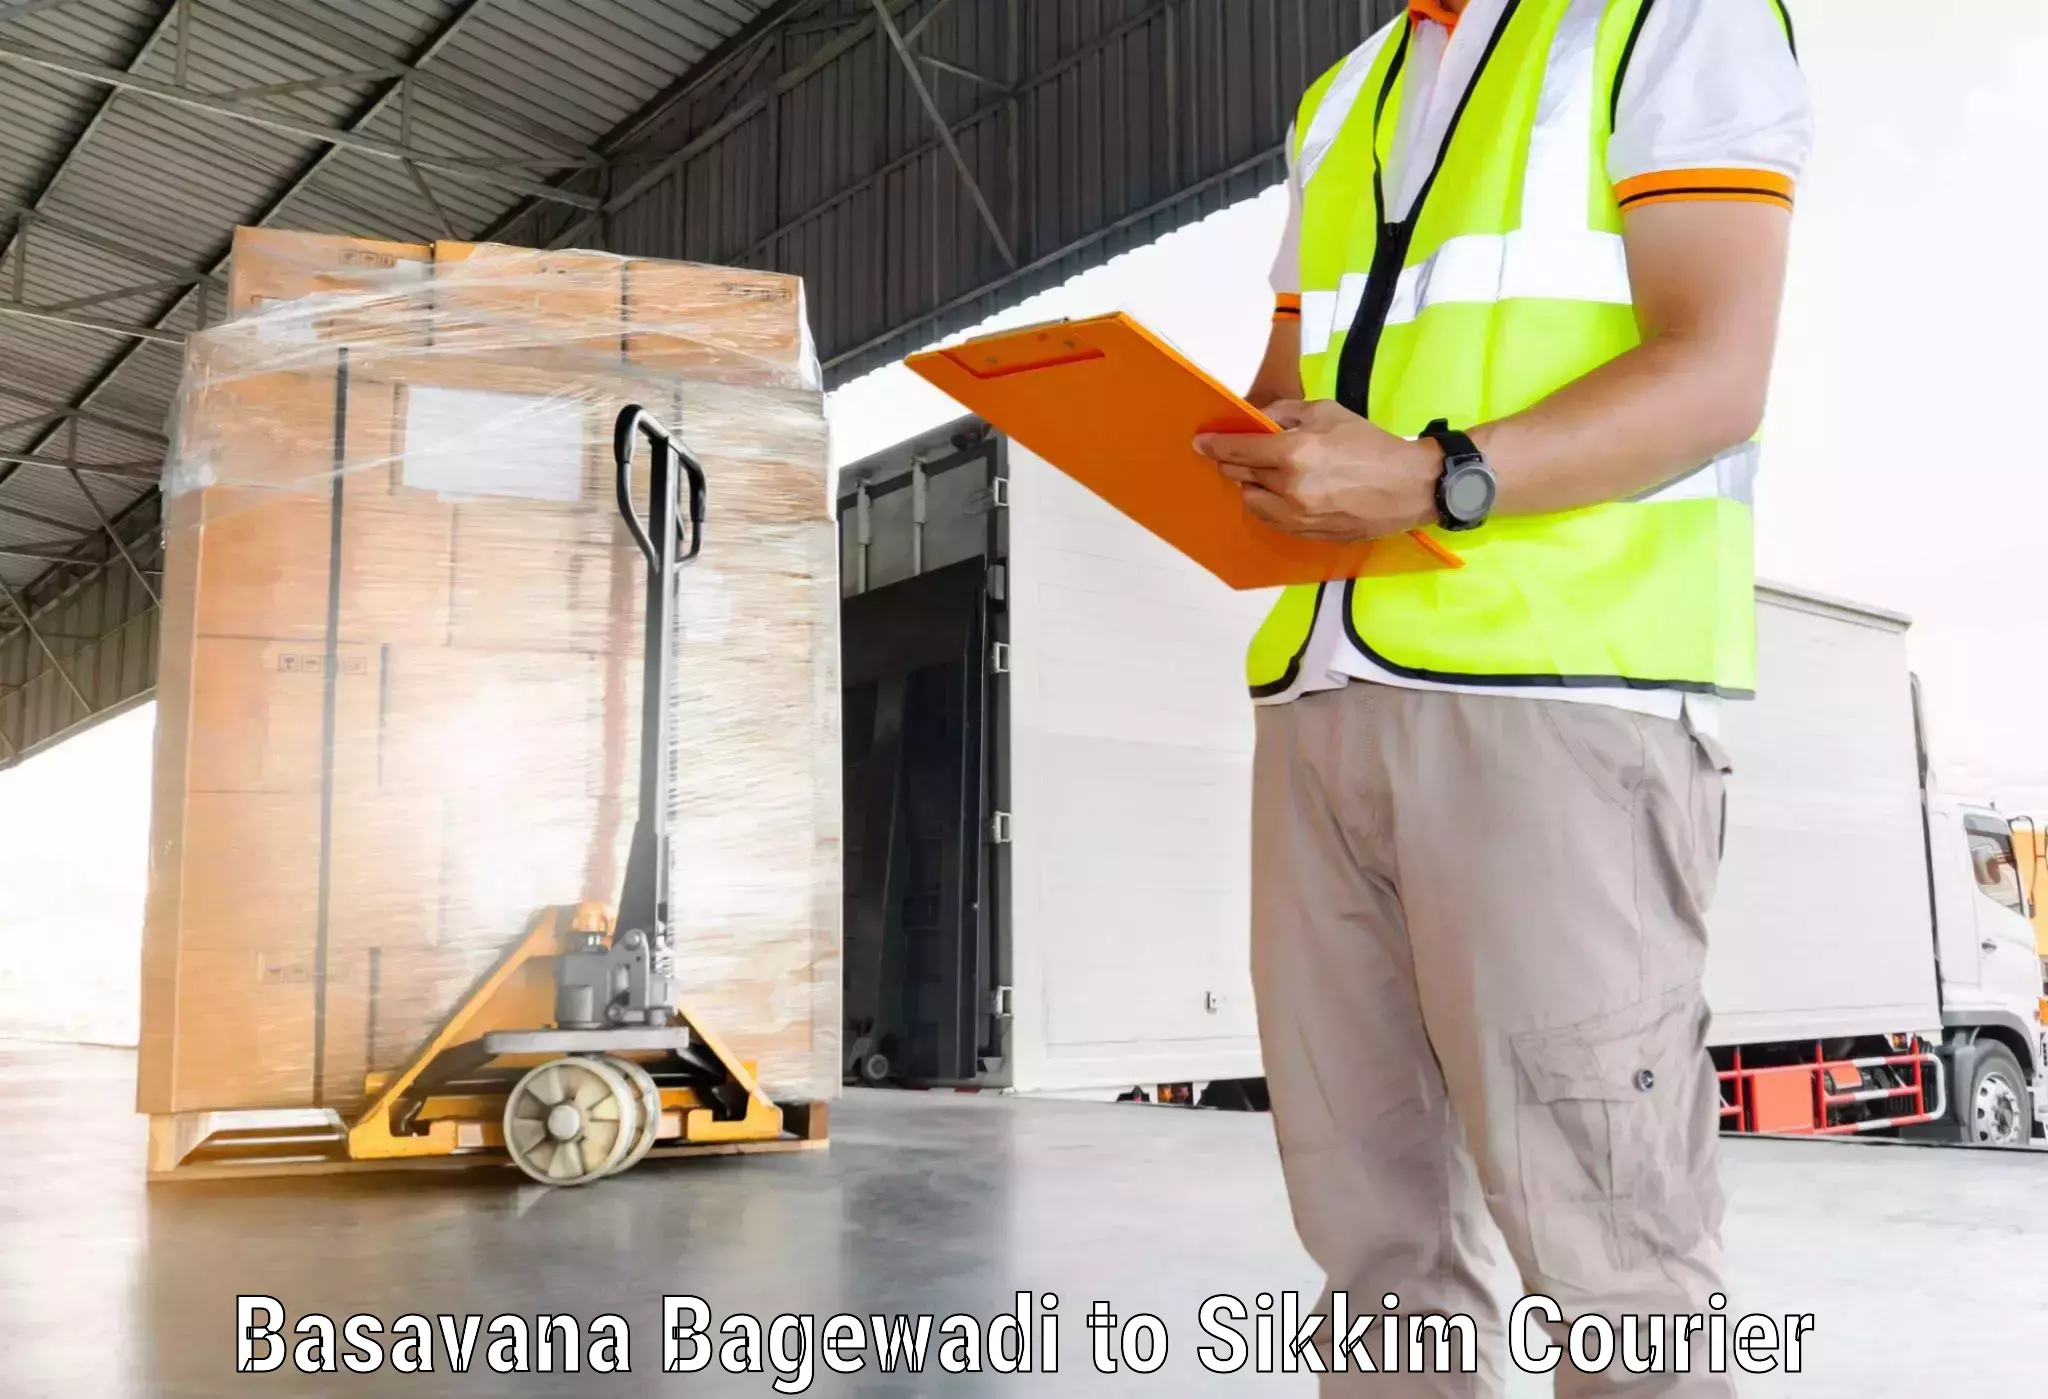 Advanced shipping technology Basavana Bagewadi to Sikkim